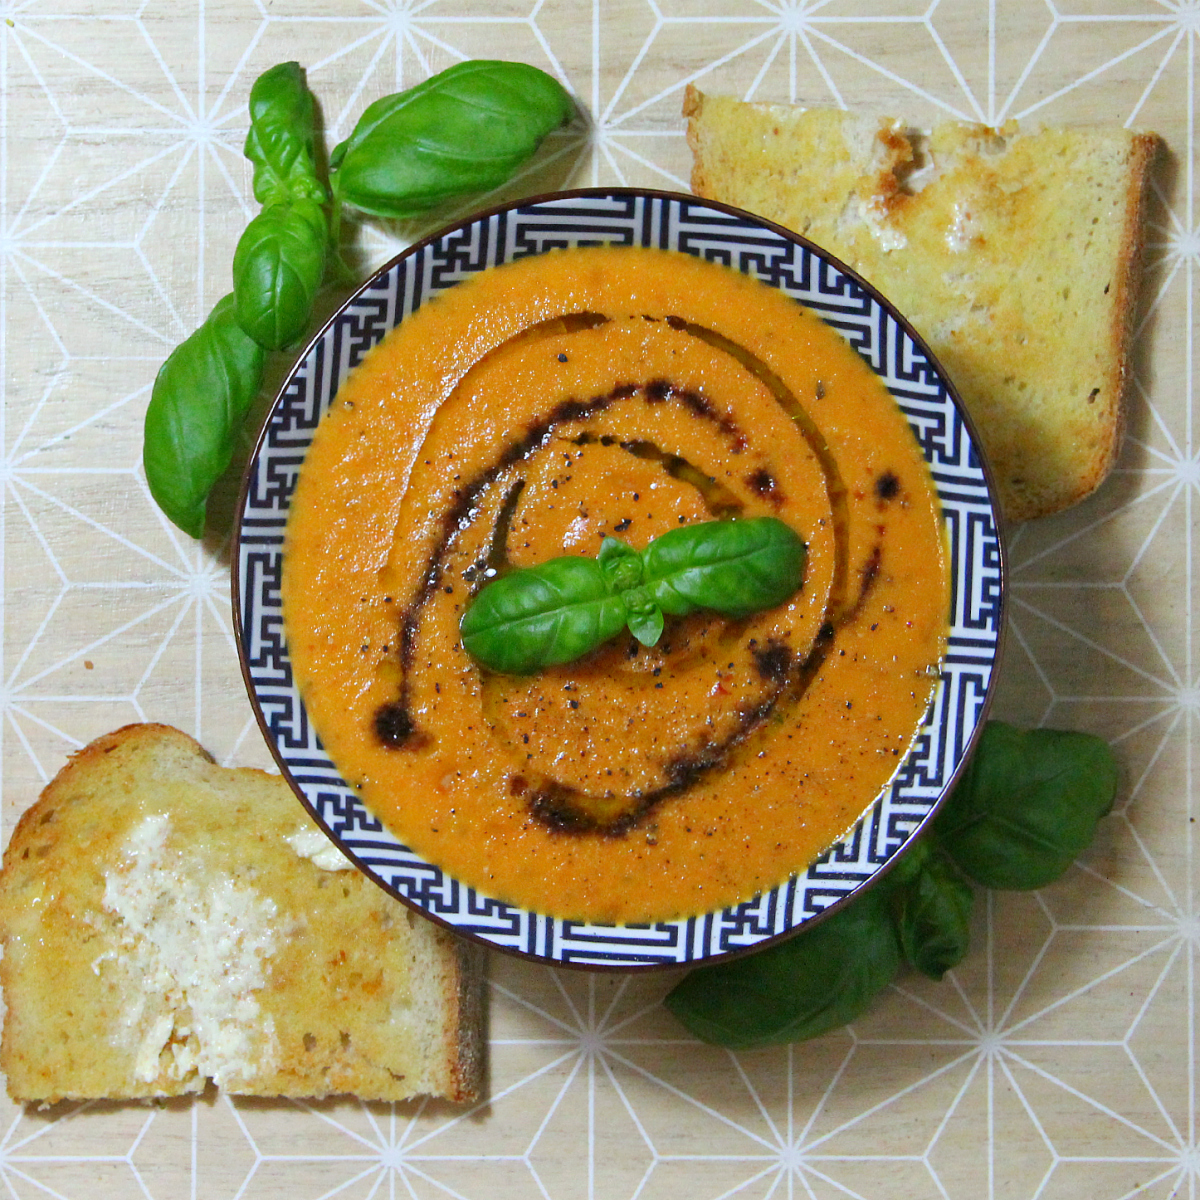 Vegan Roasted & Creamy Tomato Soup - The Vegan Eskimo